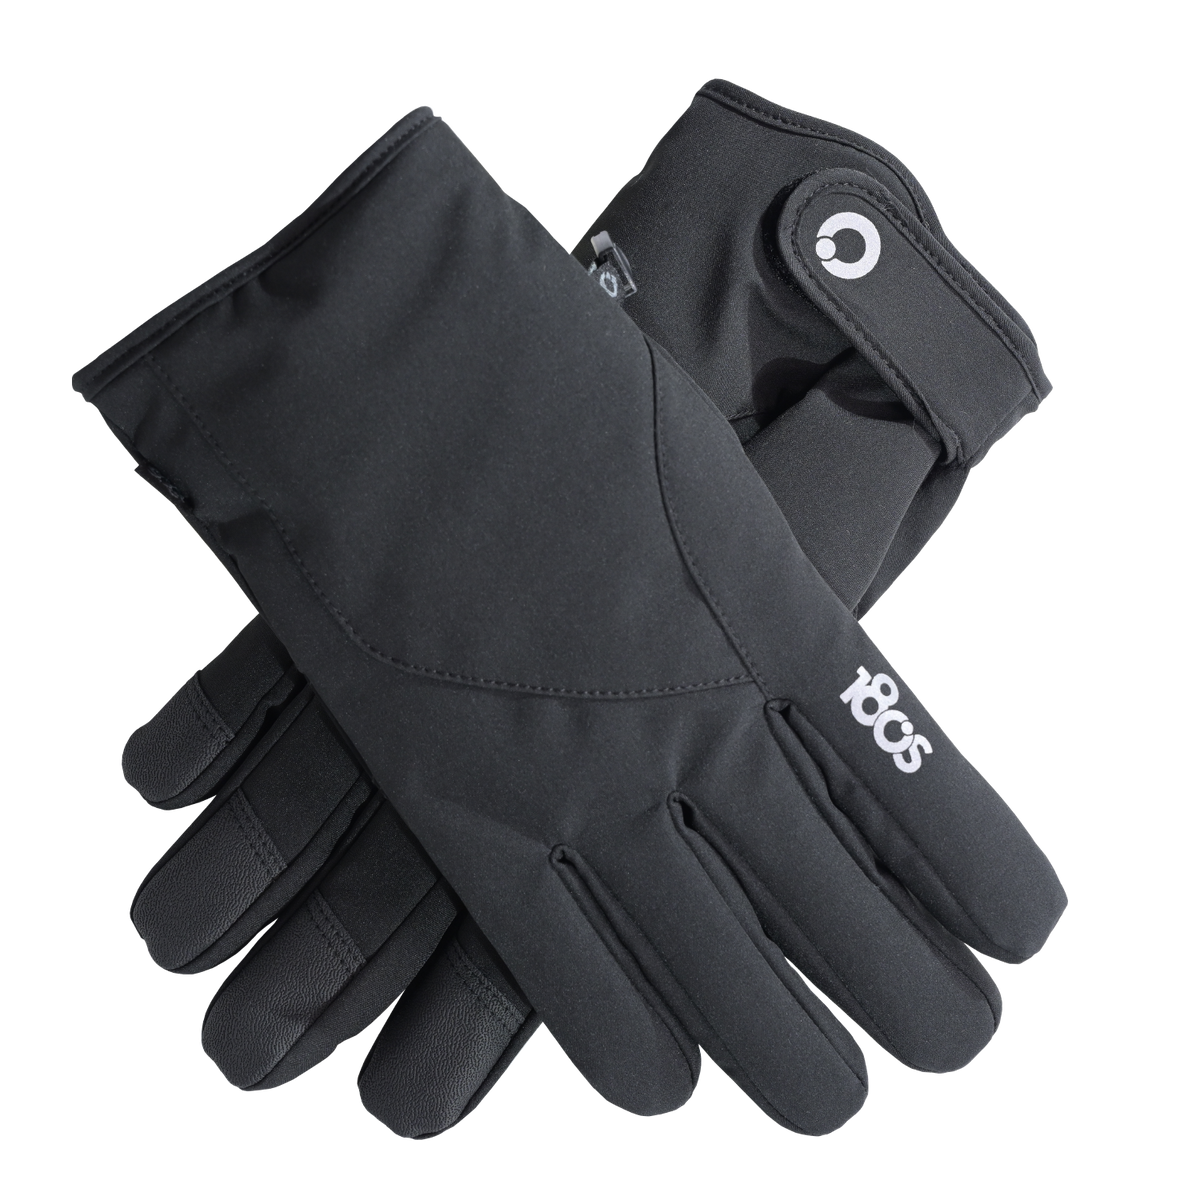 Urban Gloves Men Black